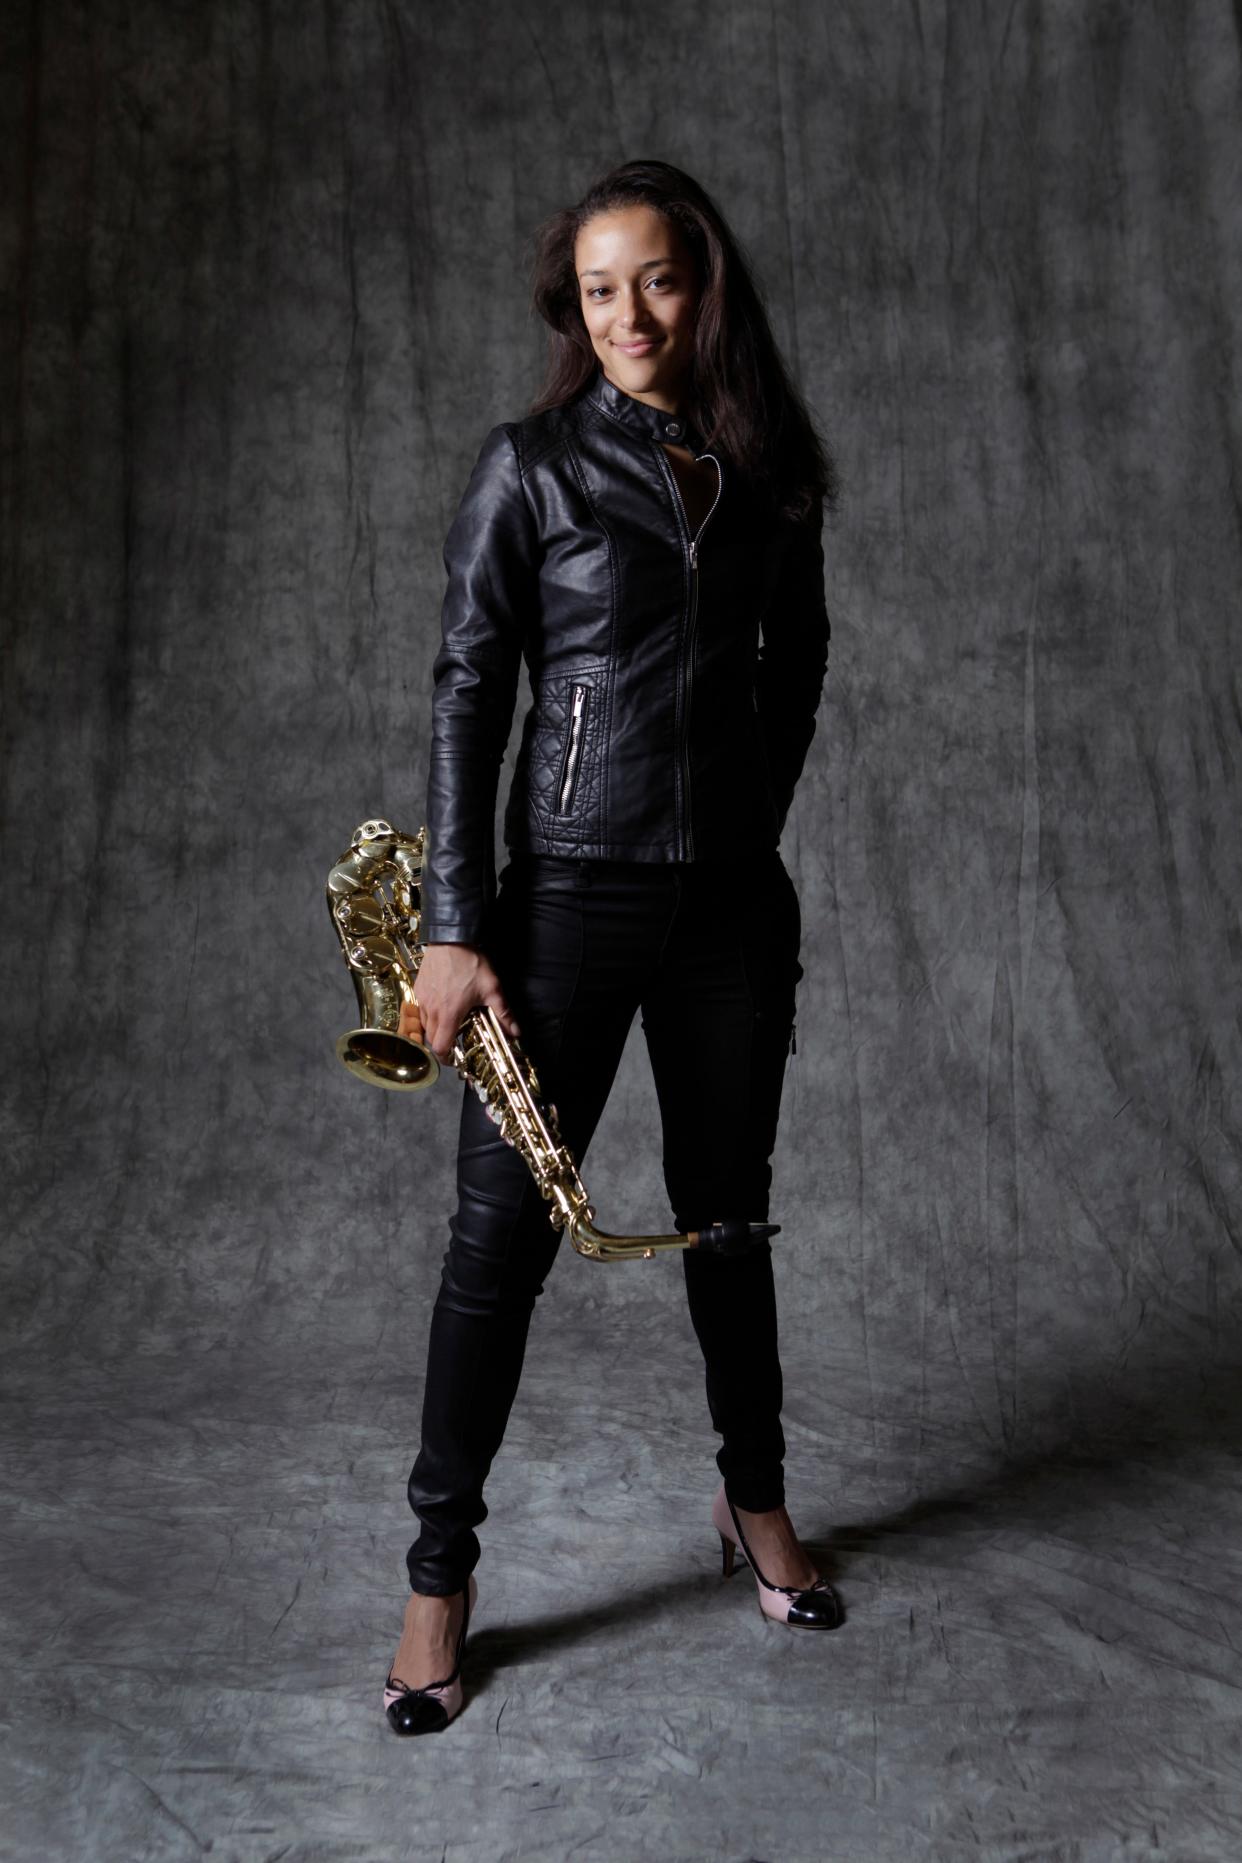 Vanessa Collier, an award-winning multi-instrumentalist, is the Sunday headliner at the North River Blues Festival at the Marshfield Fair.